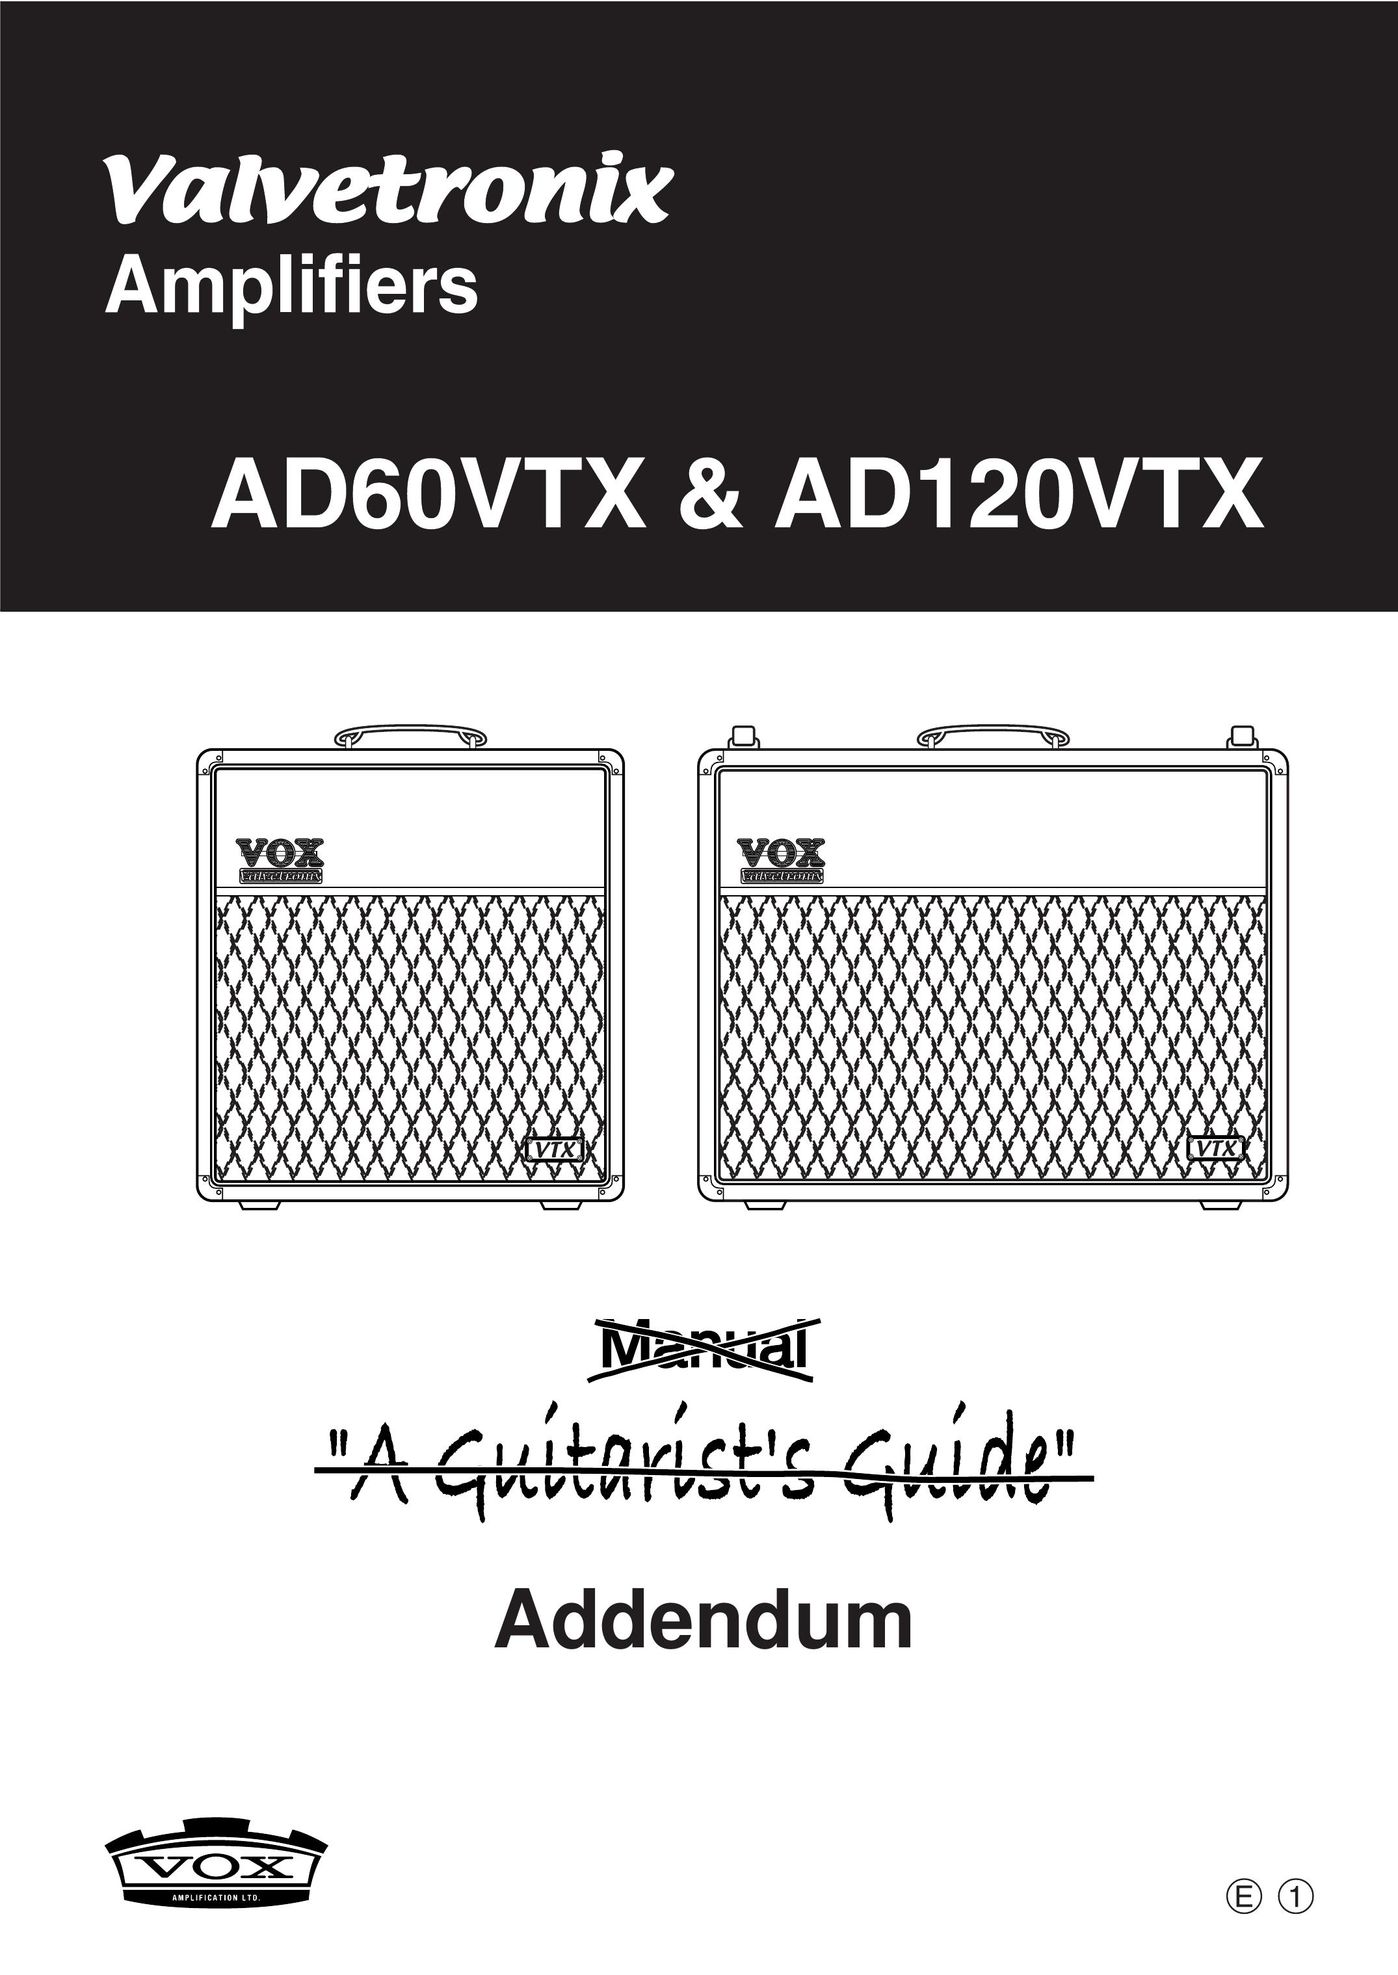 Vox AD120VTX Stereo Receiver User Manual